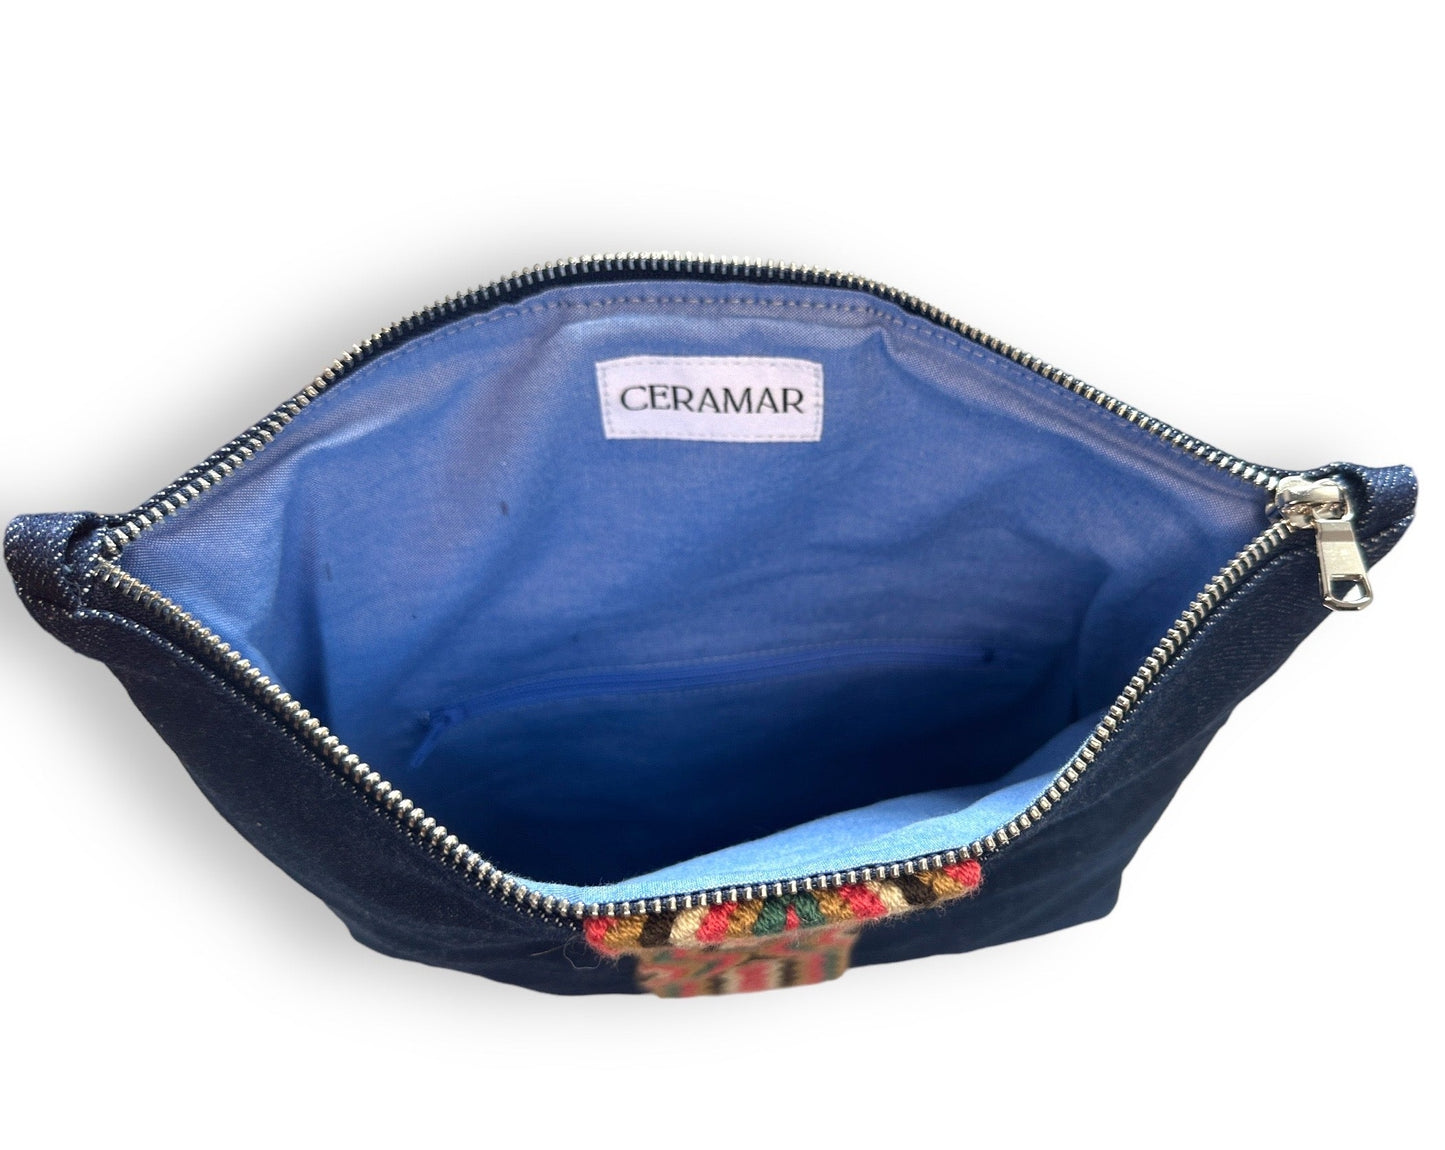 Foldover Crossbody Bag- Versatile Crossbody bag can be worn 3 ways